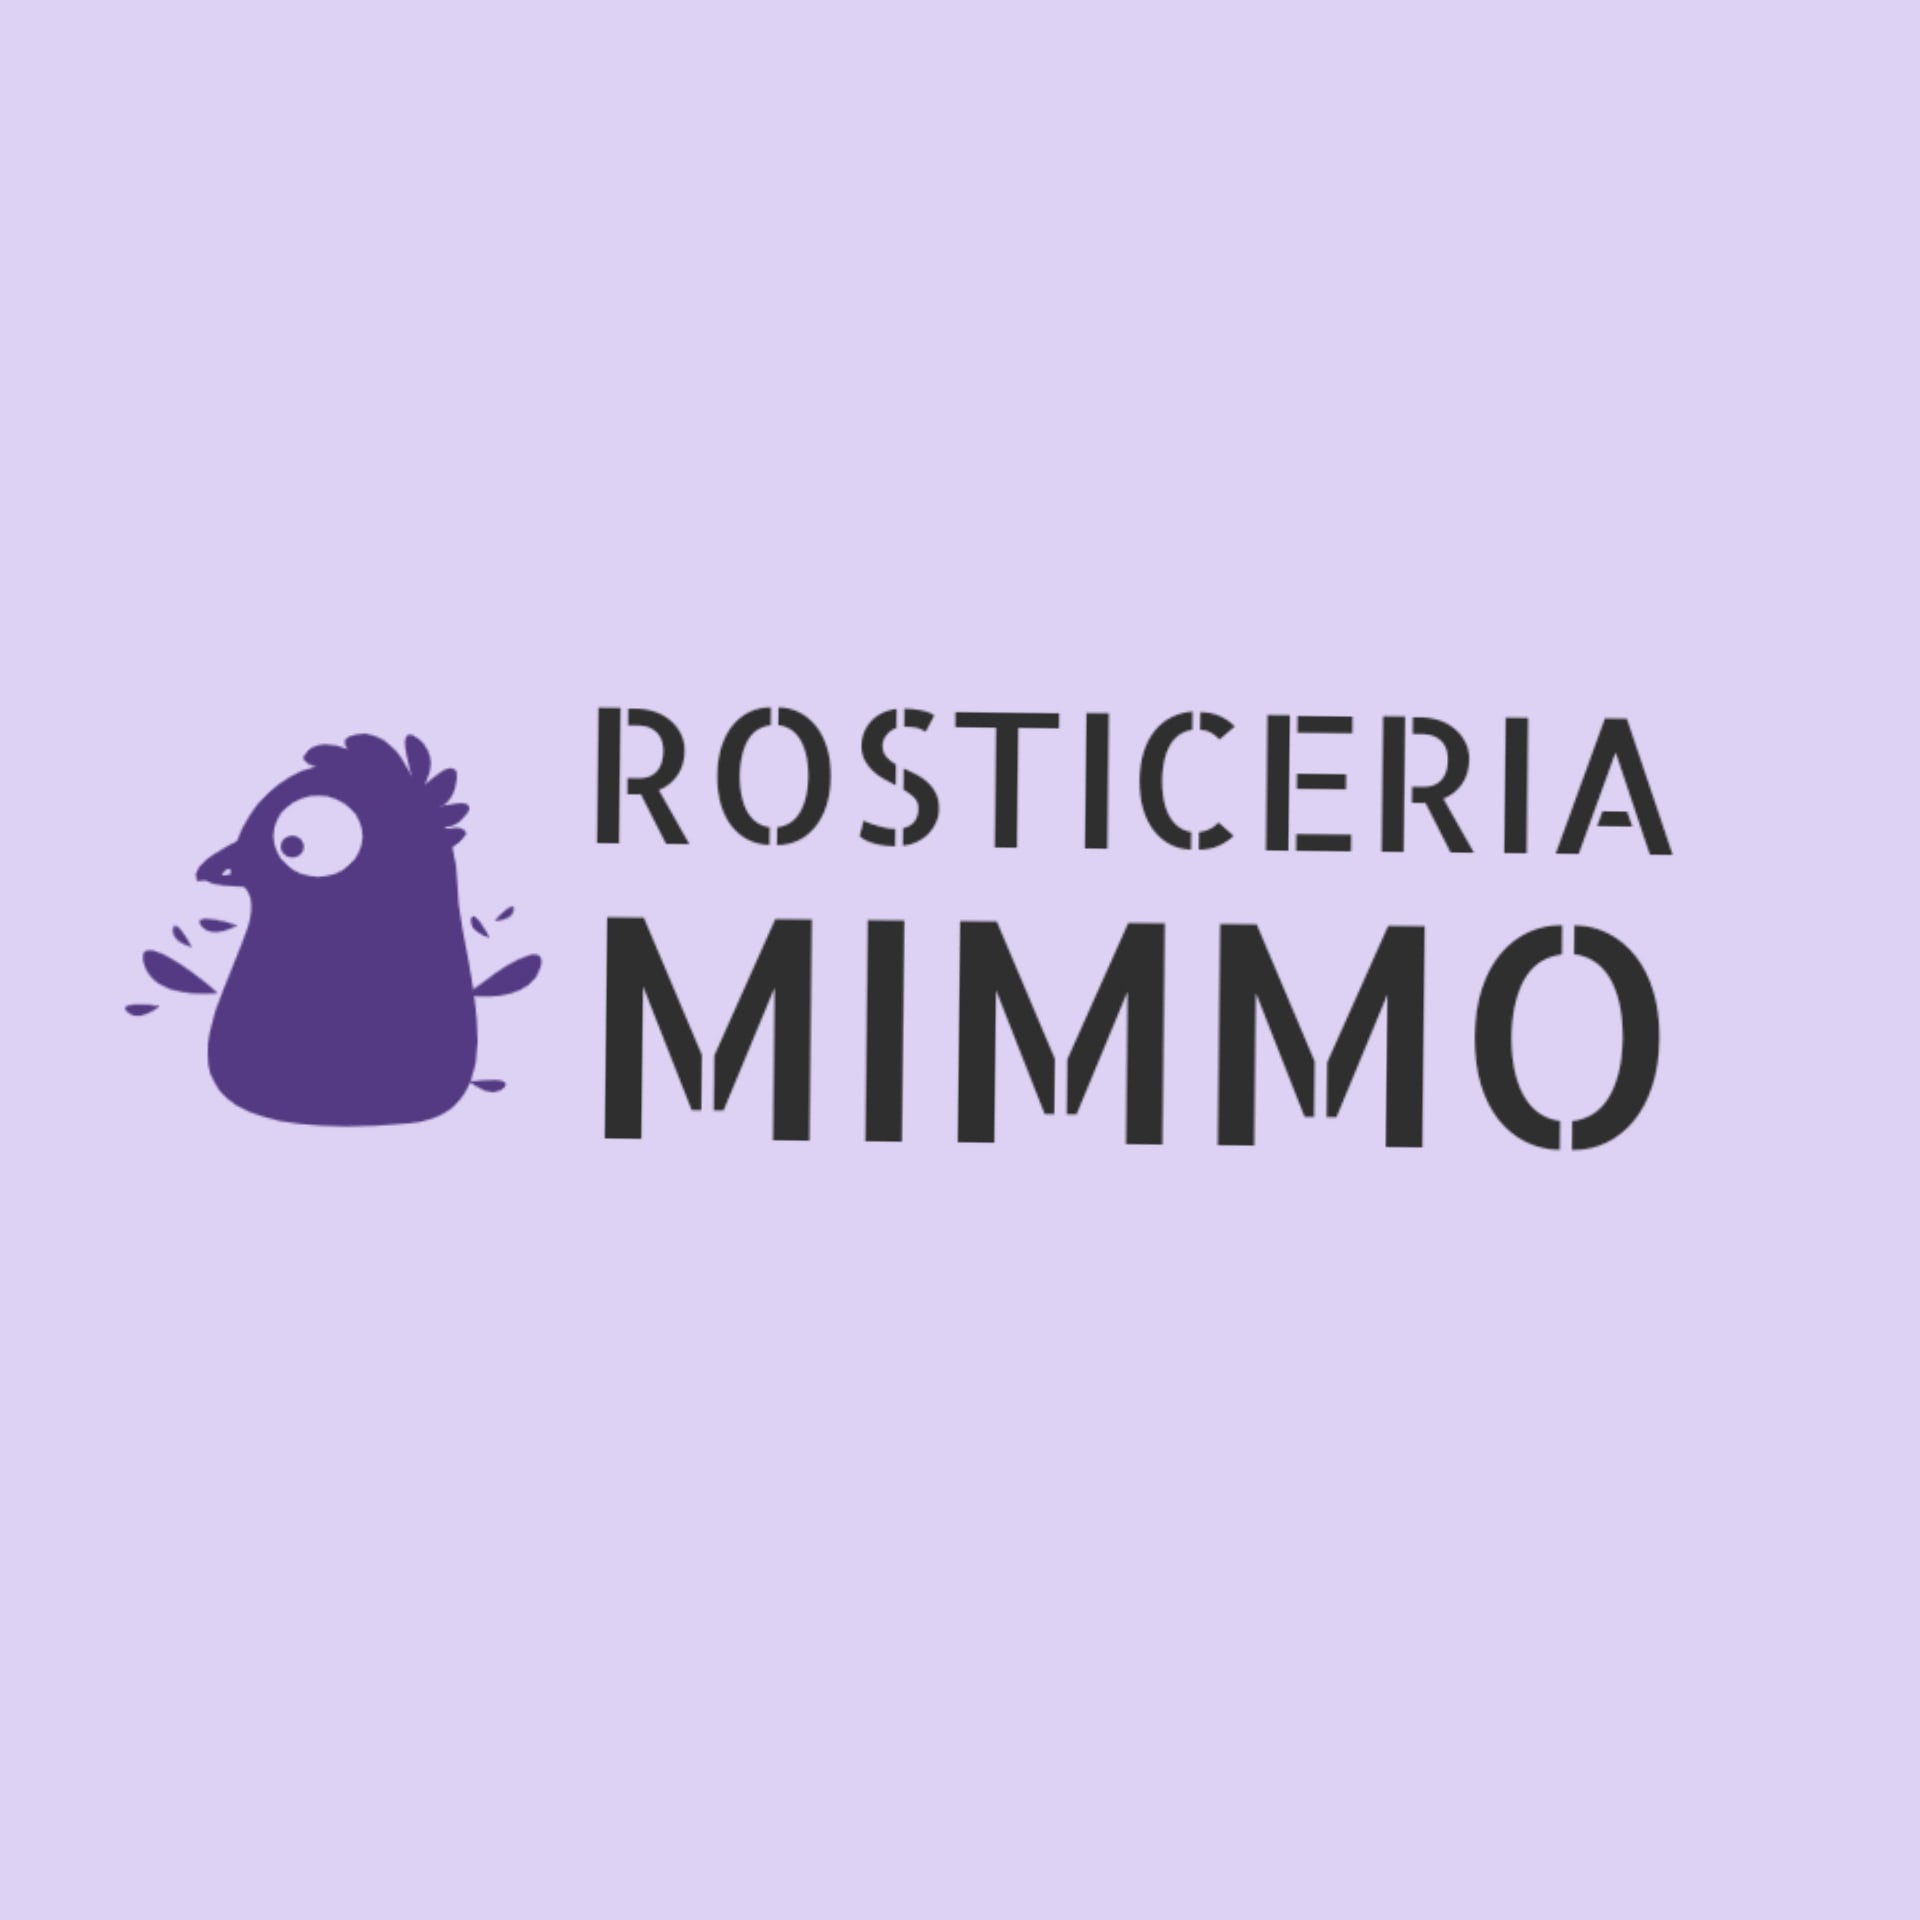 Rosticeria Mimmo